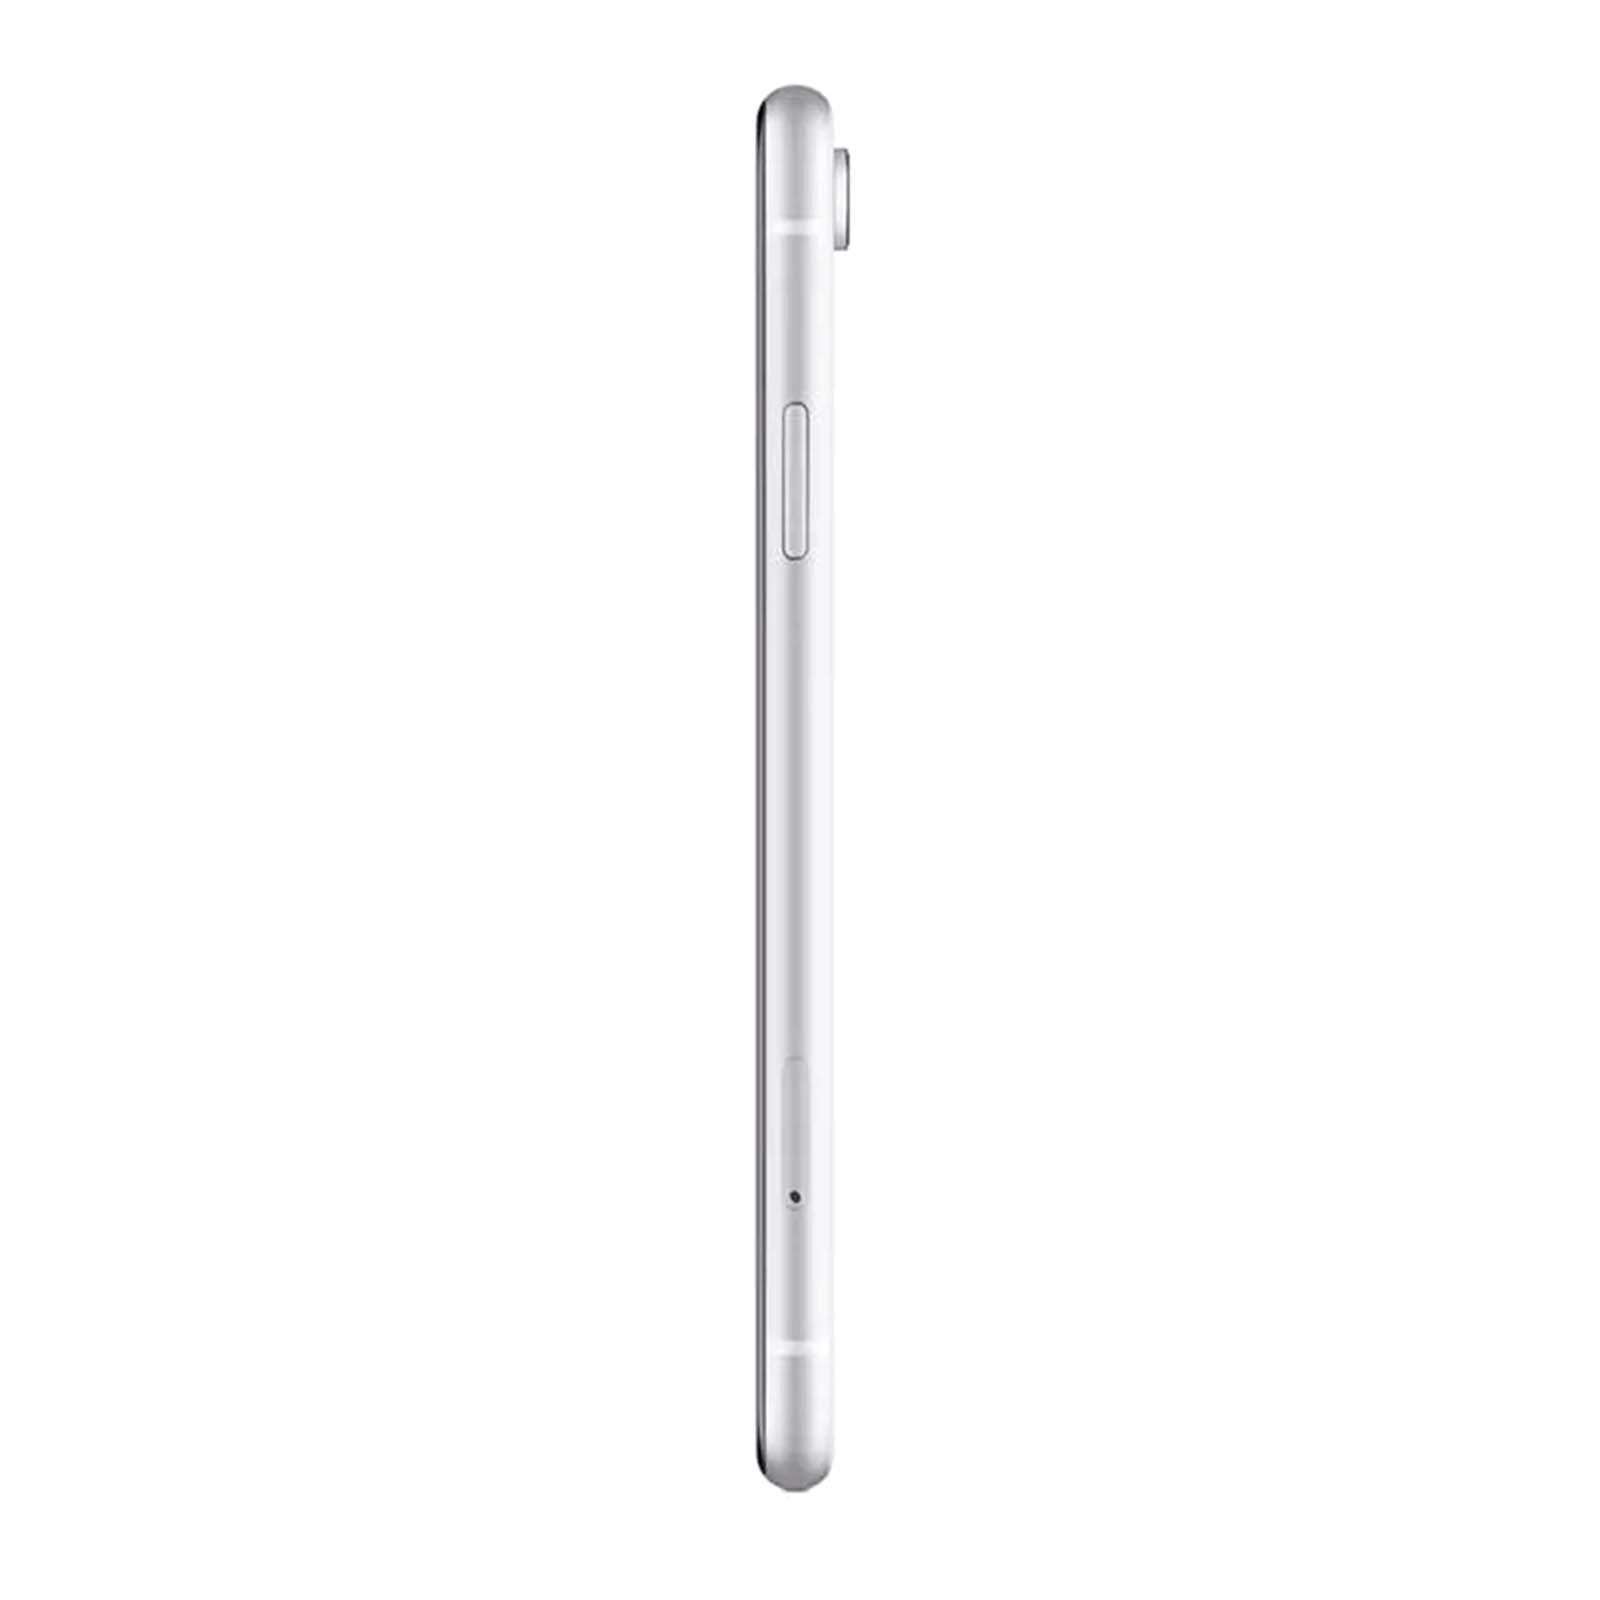 Apple iPhone XR 256GB White Fair - Unlocked